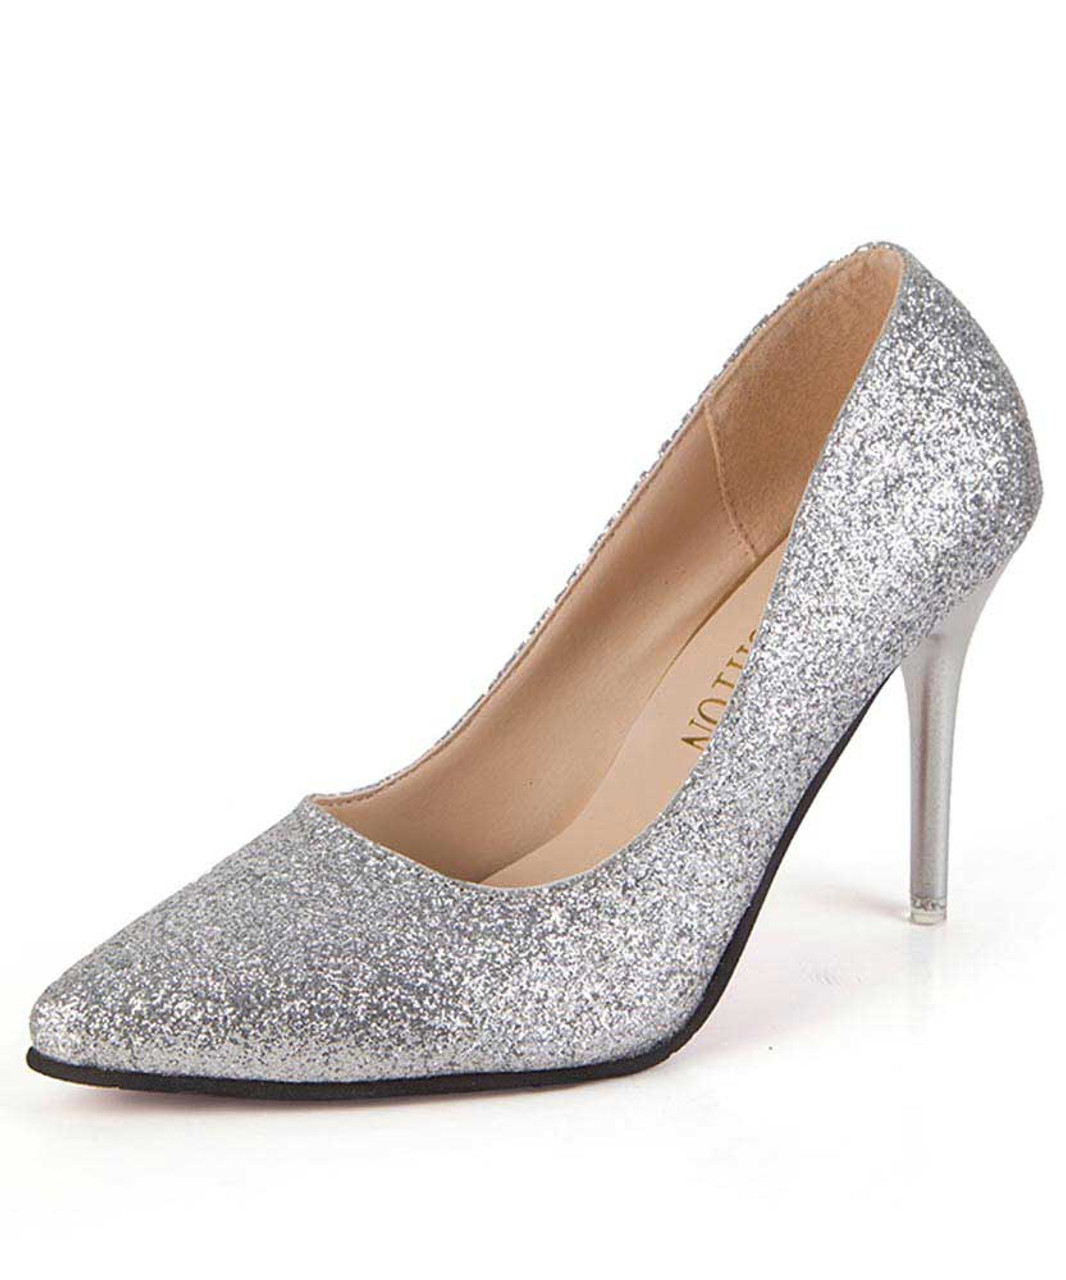 silver glitter dress shoes